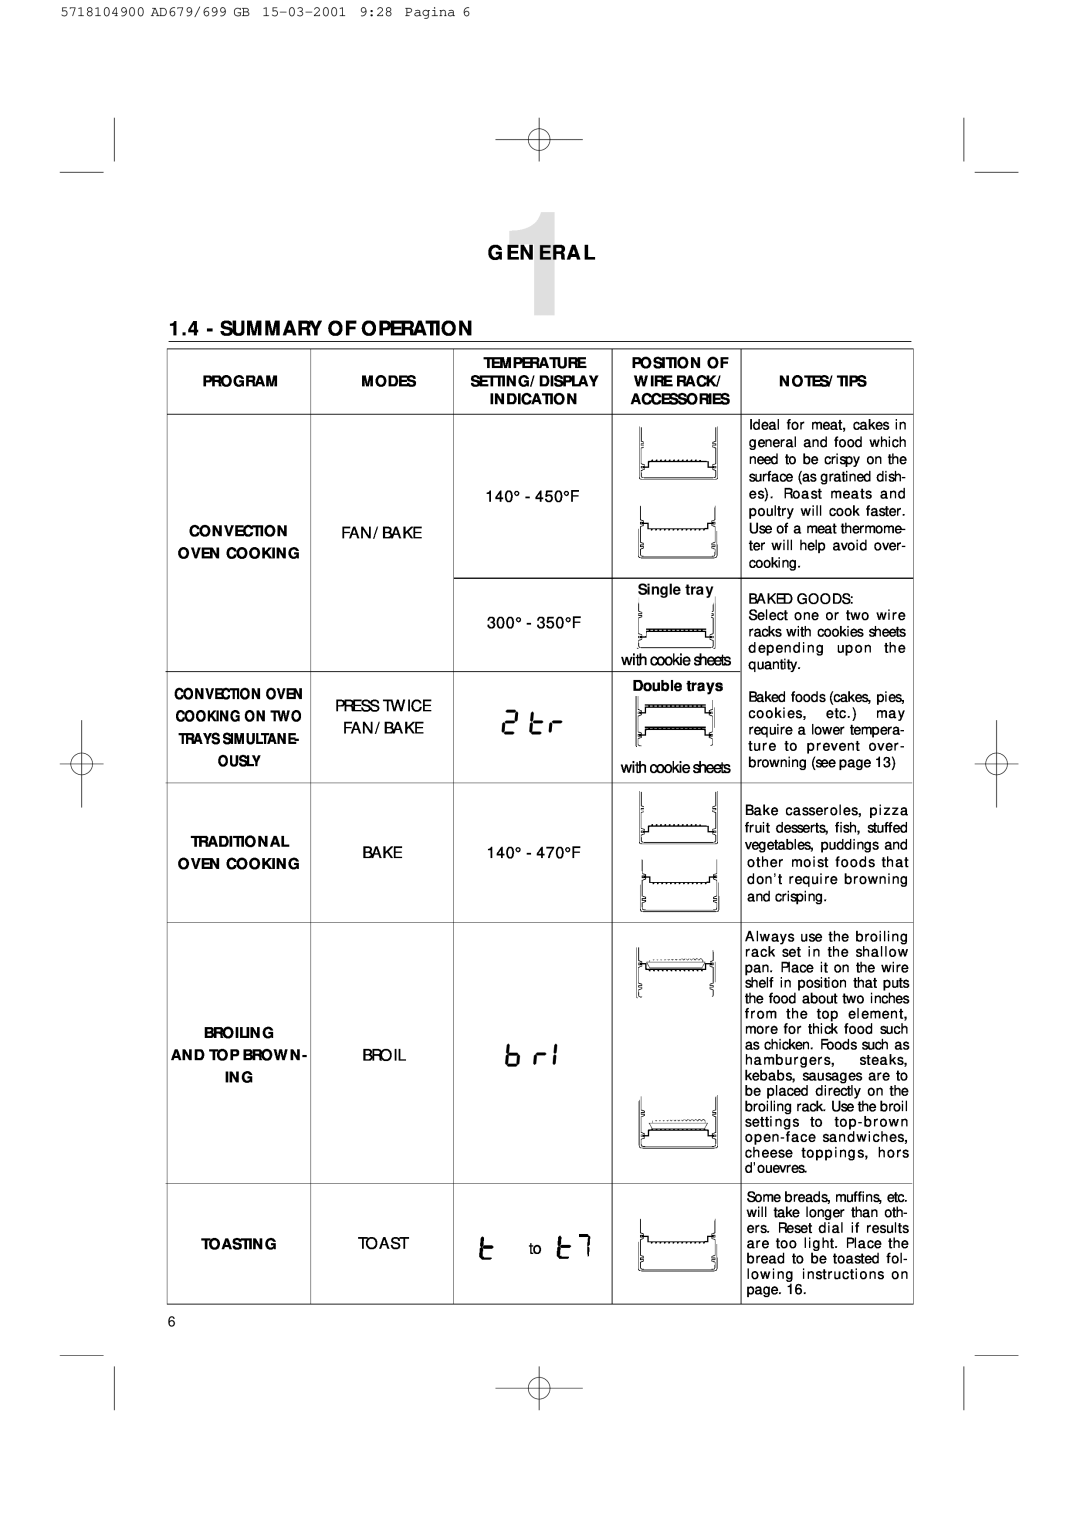 DeLonghi AD679/699 manual Summary Of Operation, G E N E R A L 